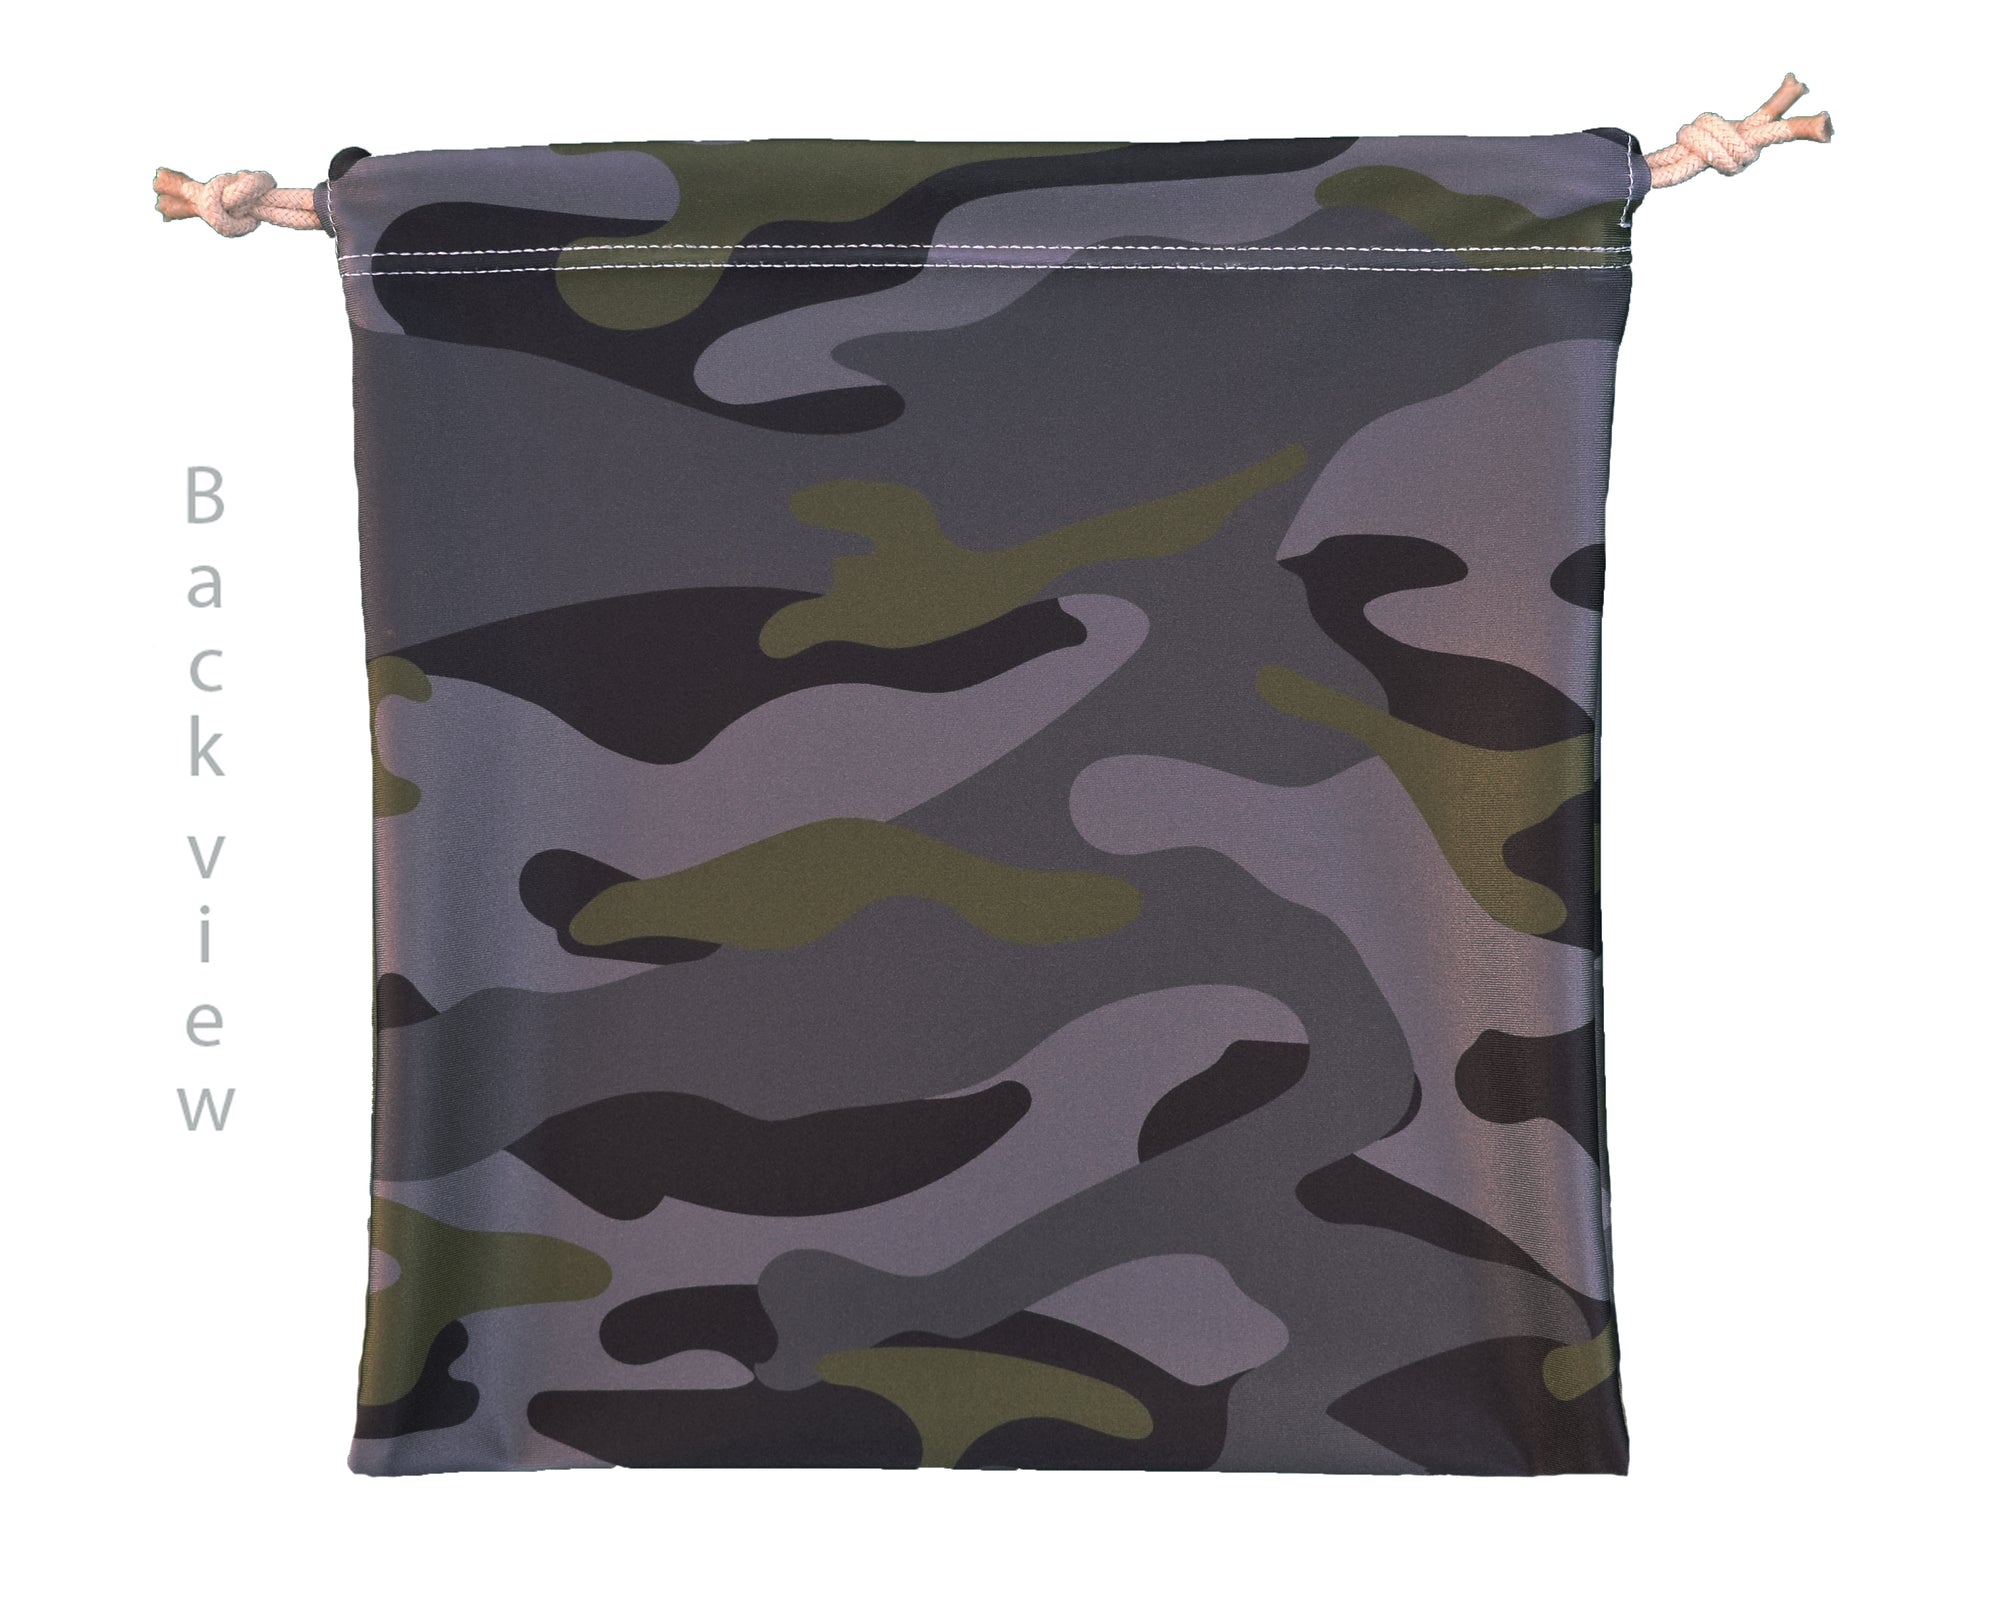 Gymnastics Grip Bag in Olive Camouflage